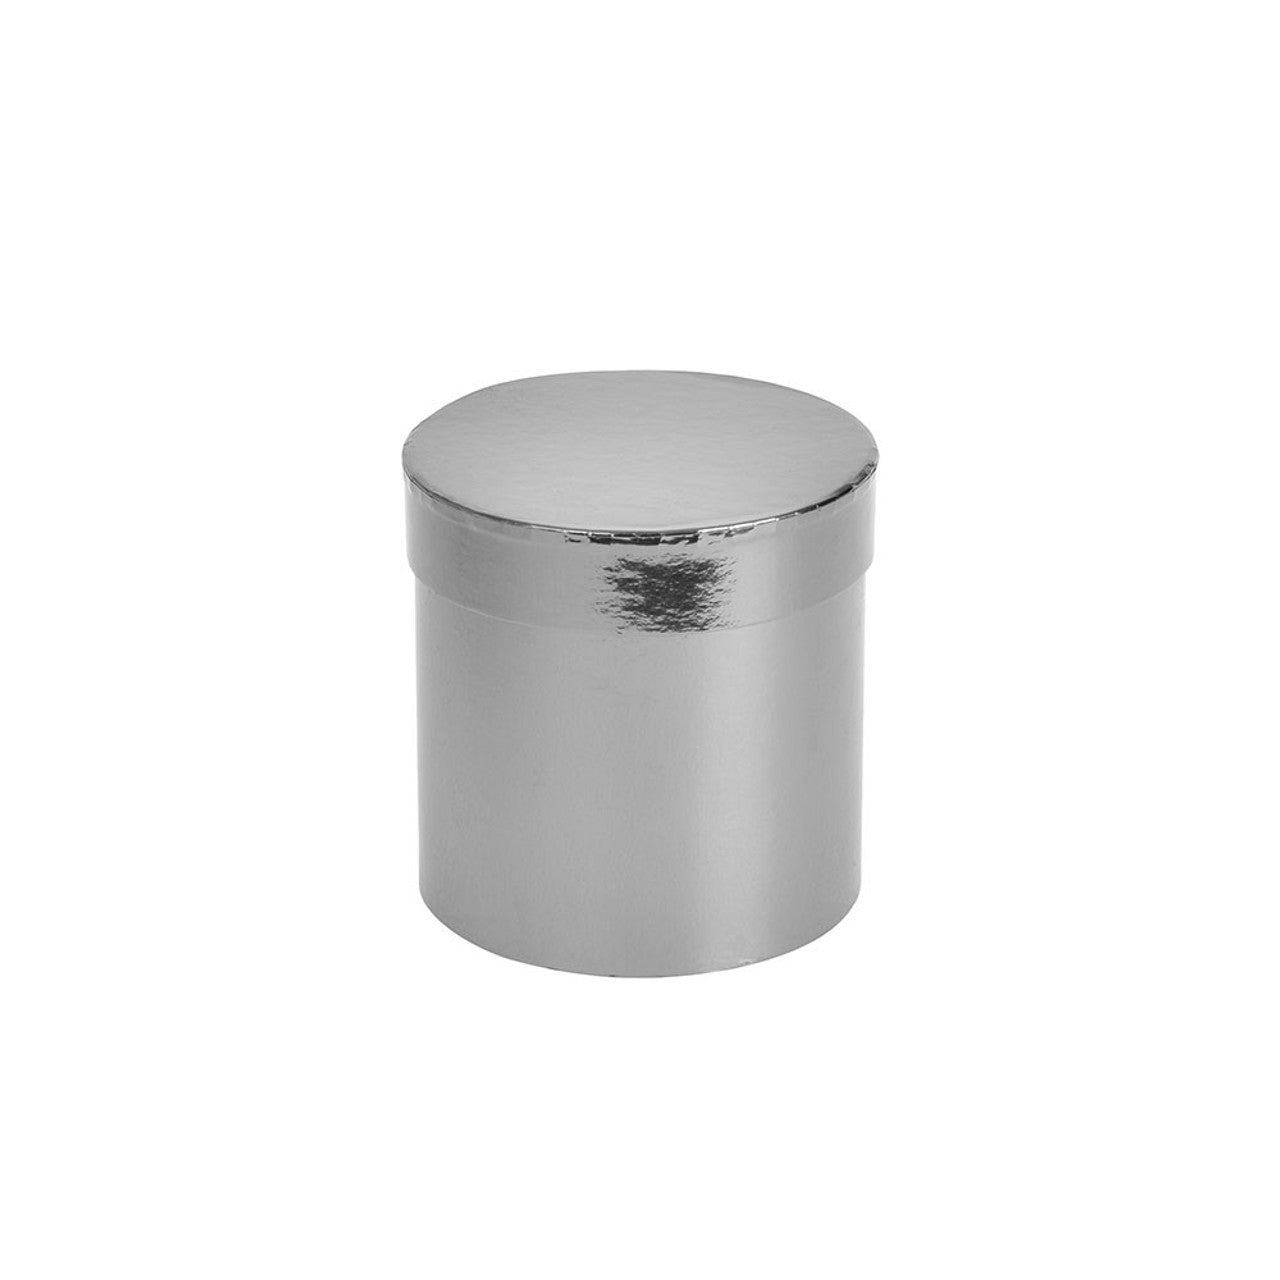 View Metallic Silver Small Hat Box W13cm x D14cm information